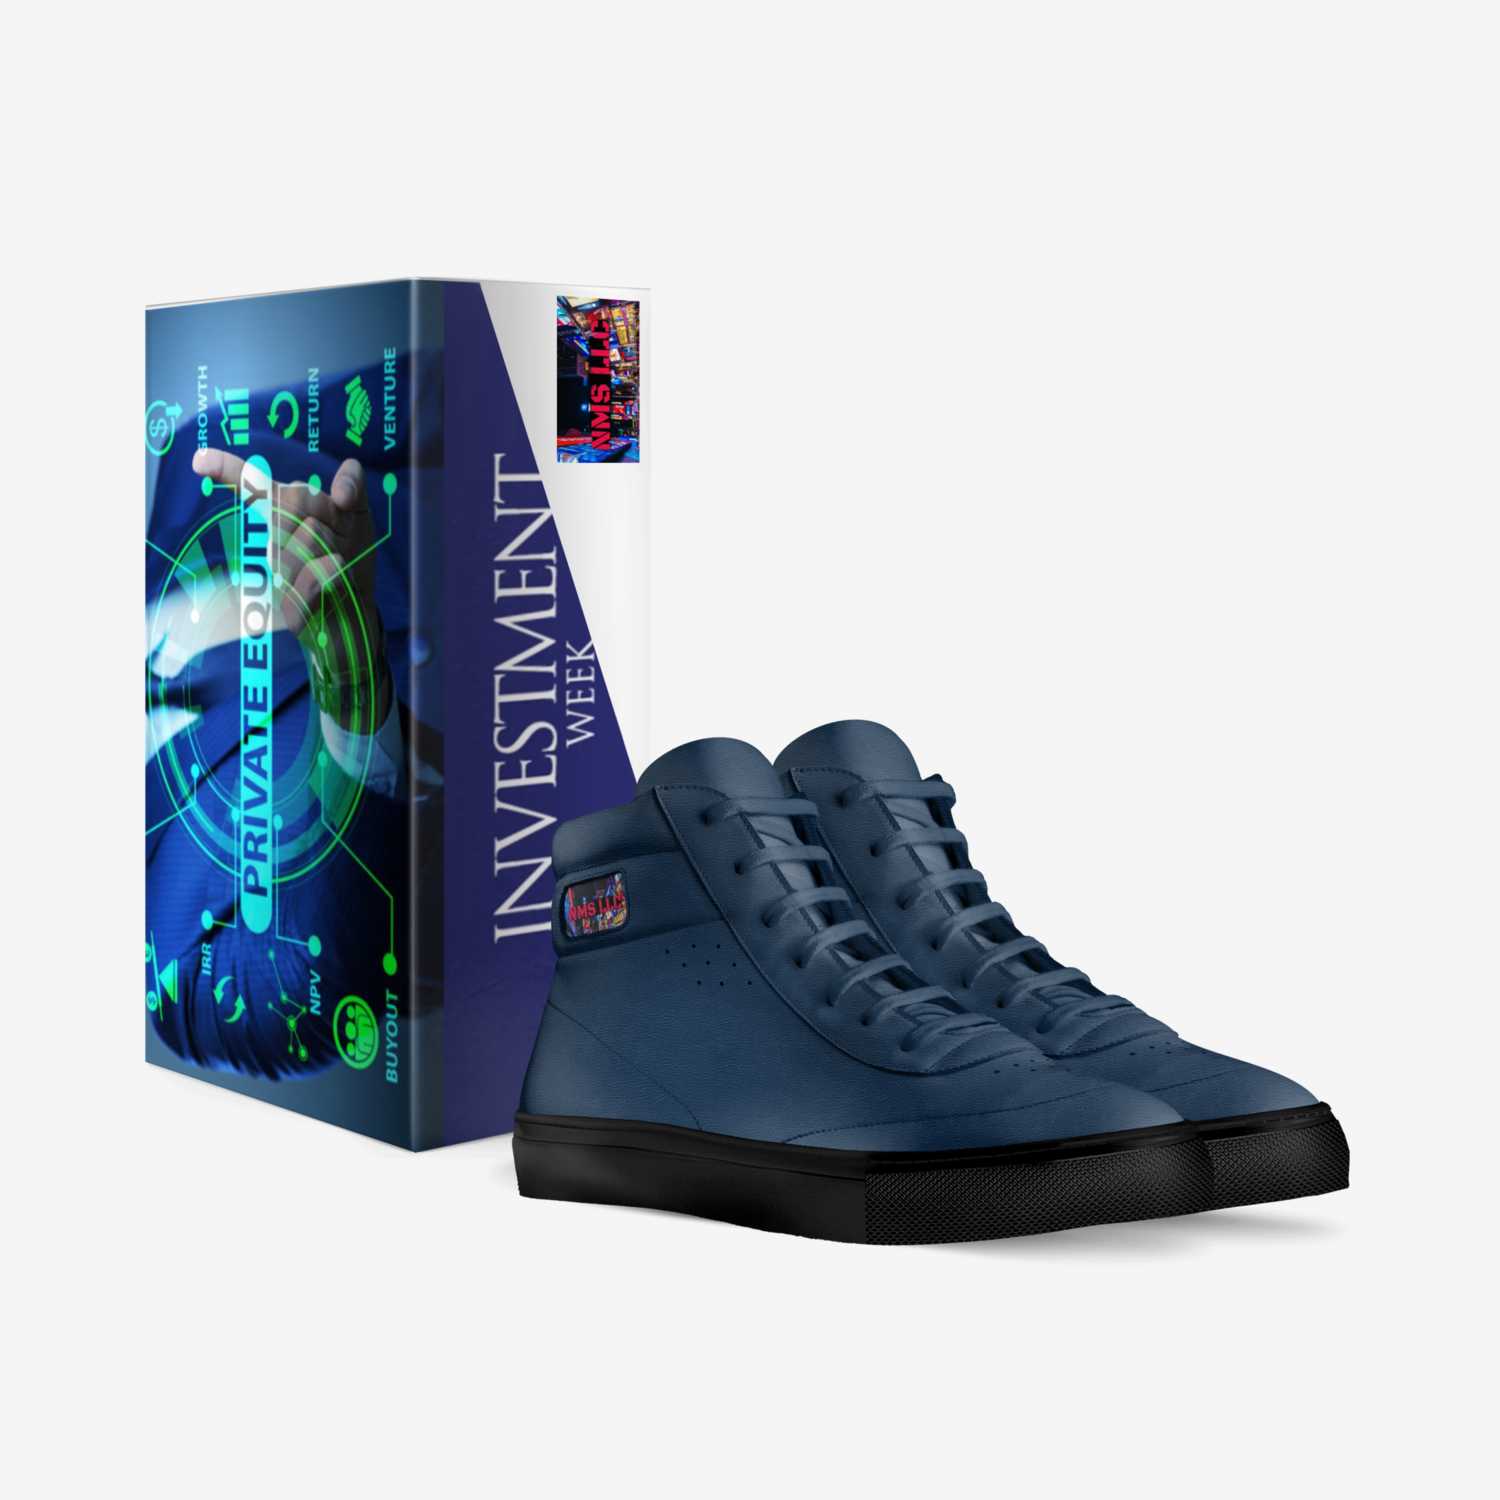 NMS LLC FootwearNY custom made in Italy shoes by Ml Harris Kixon Kixoff | Box view